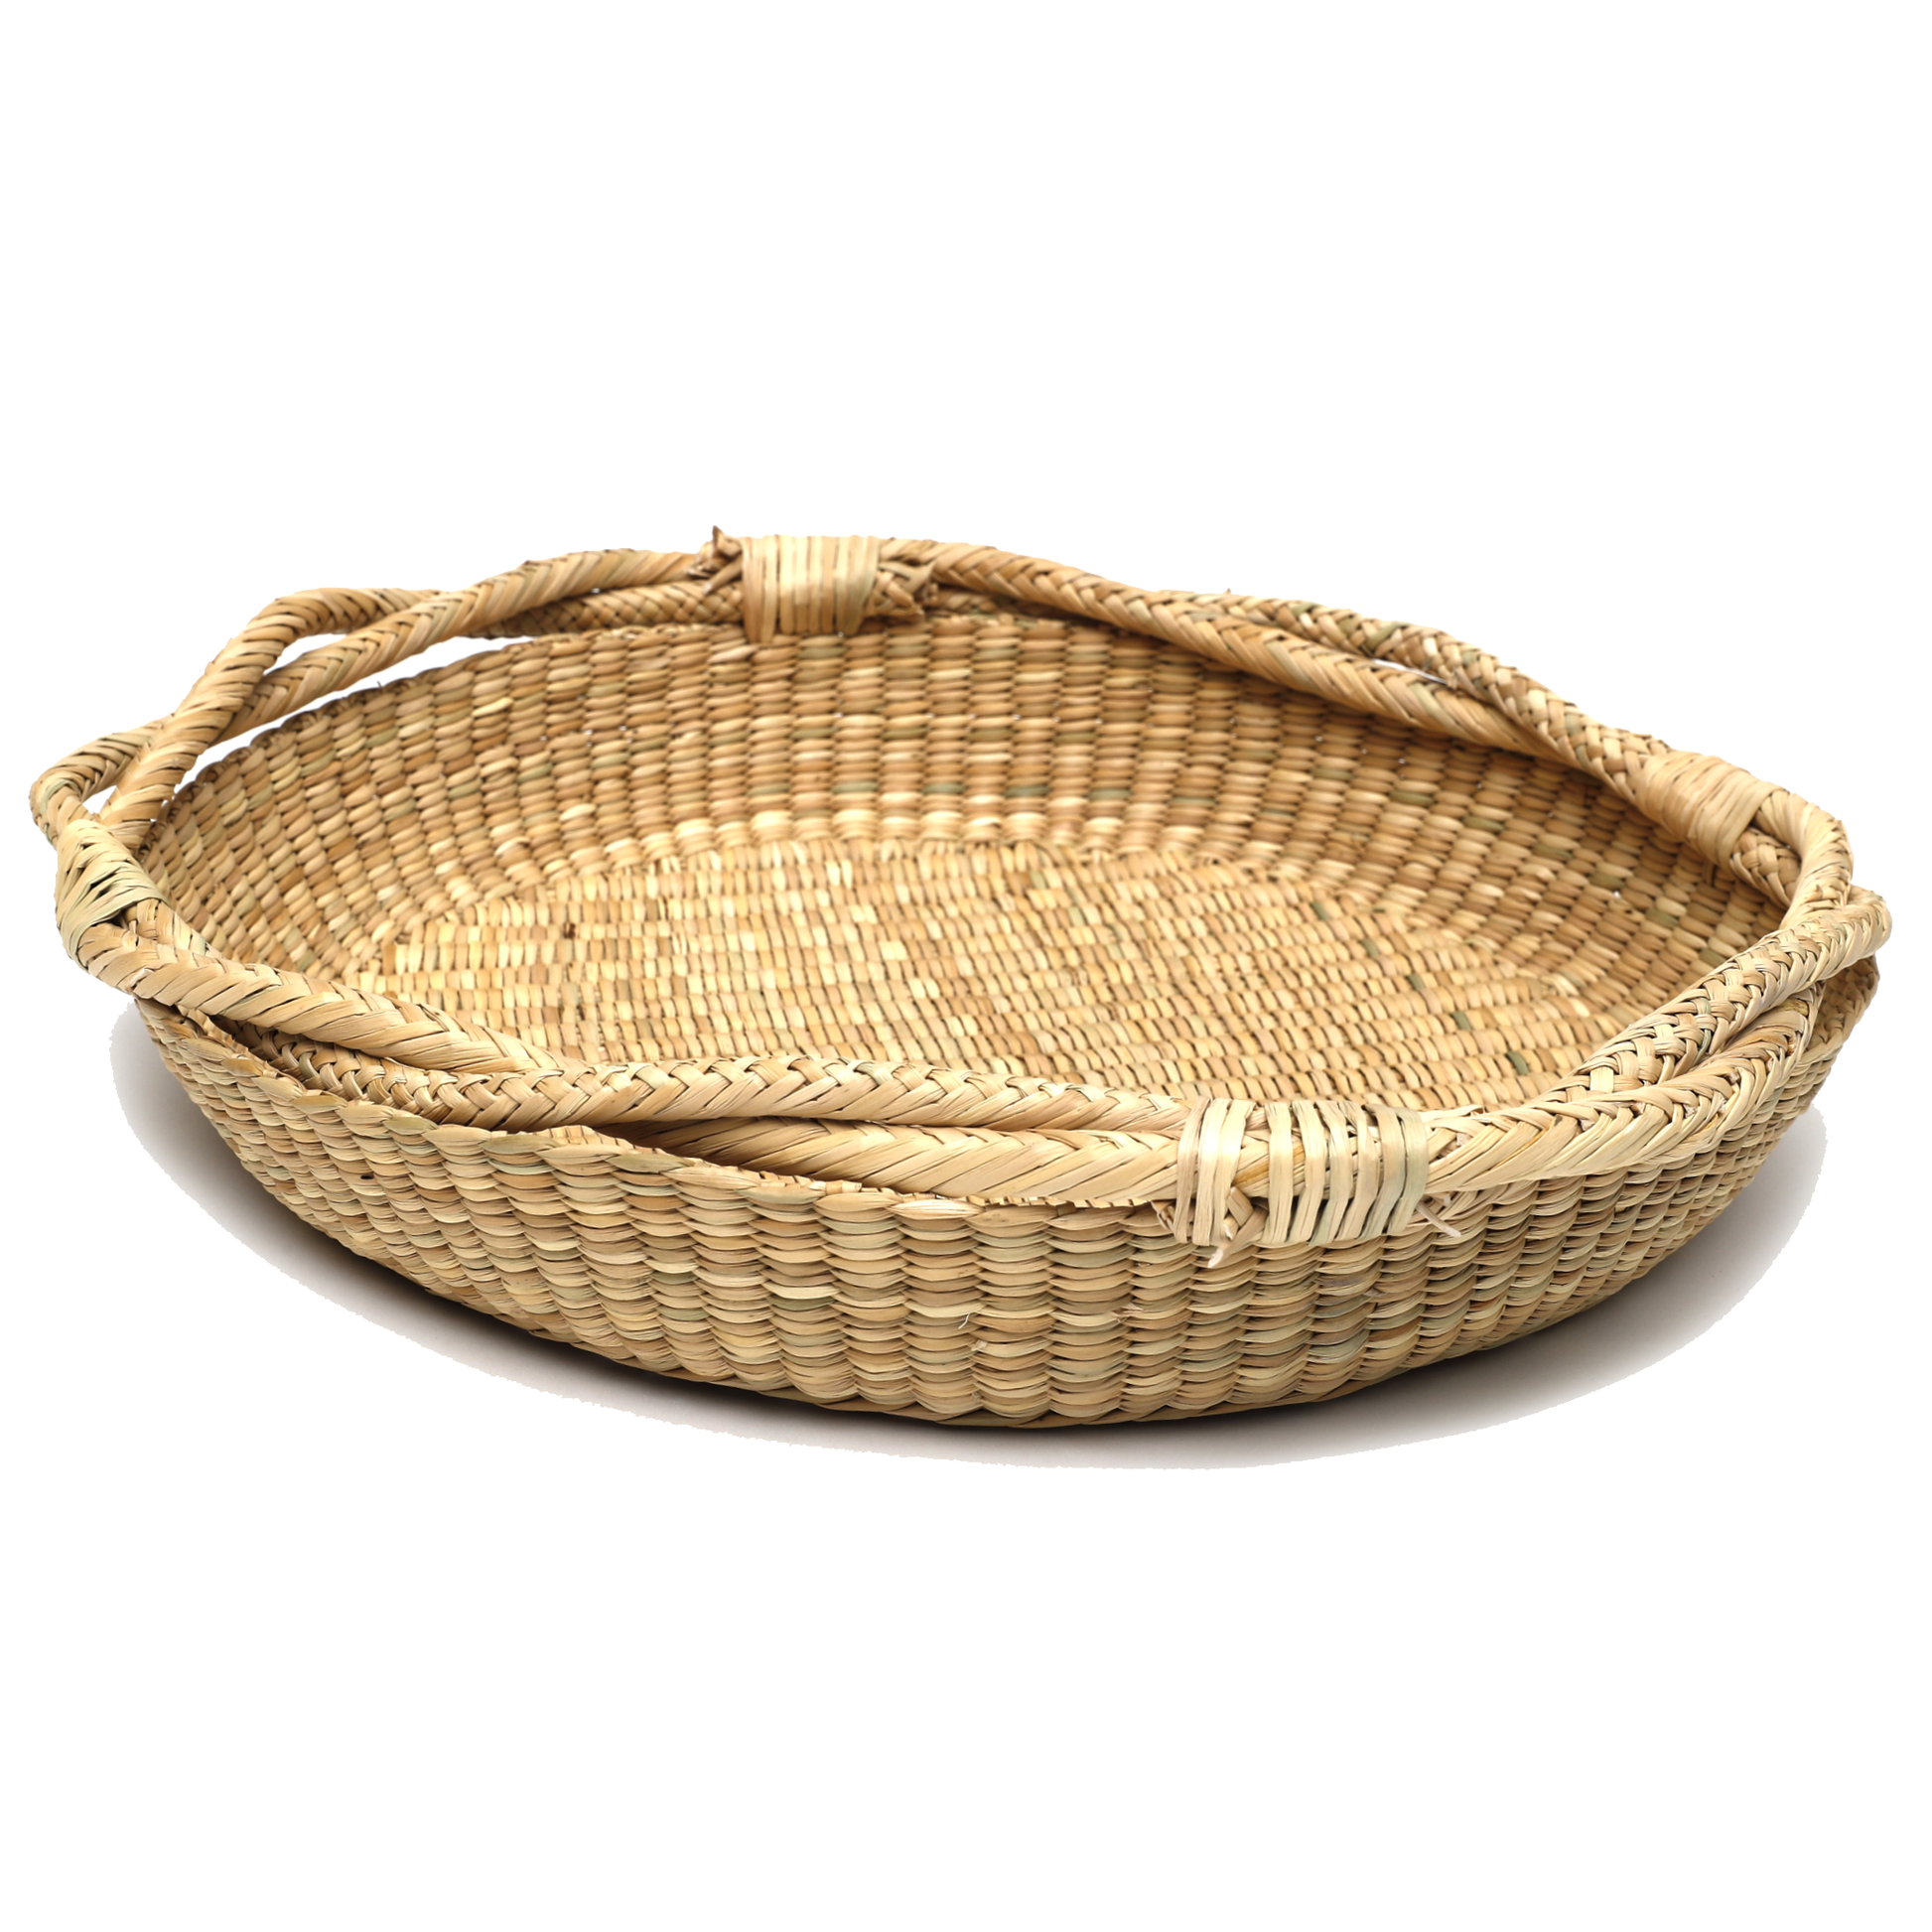 Intiearth Paraiso Platter Baskets Bread Bowl Tabletop Dining Home Decor